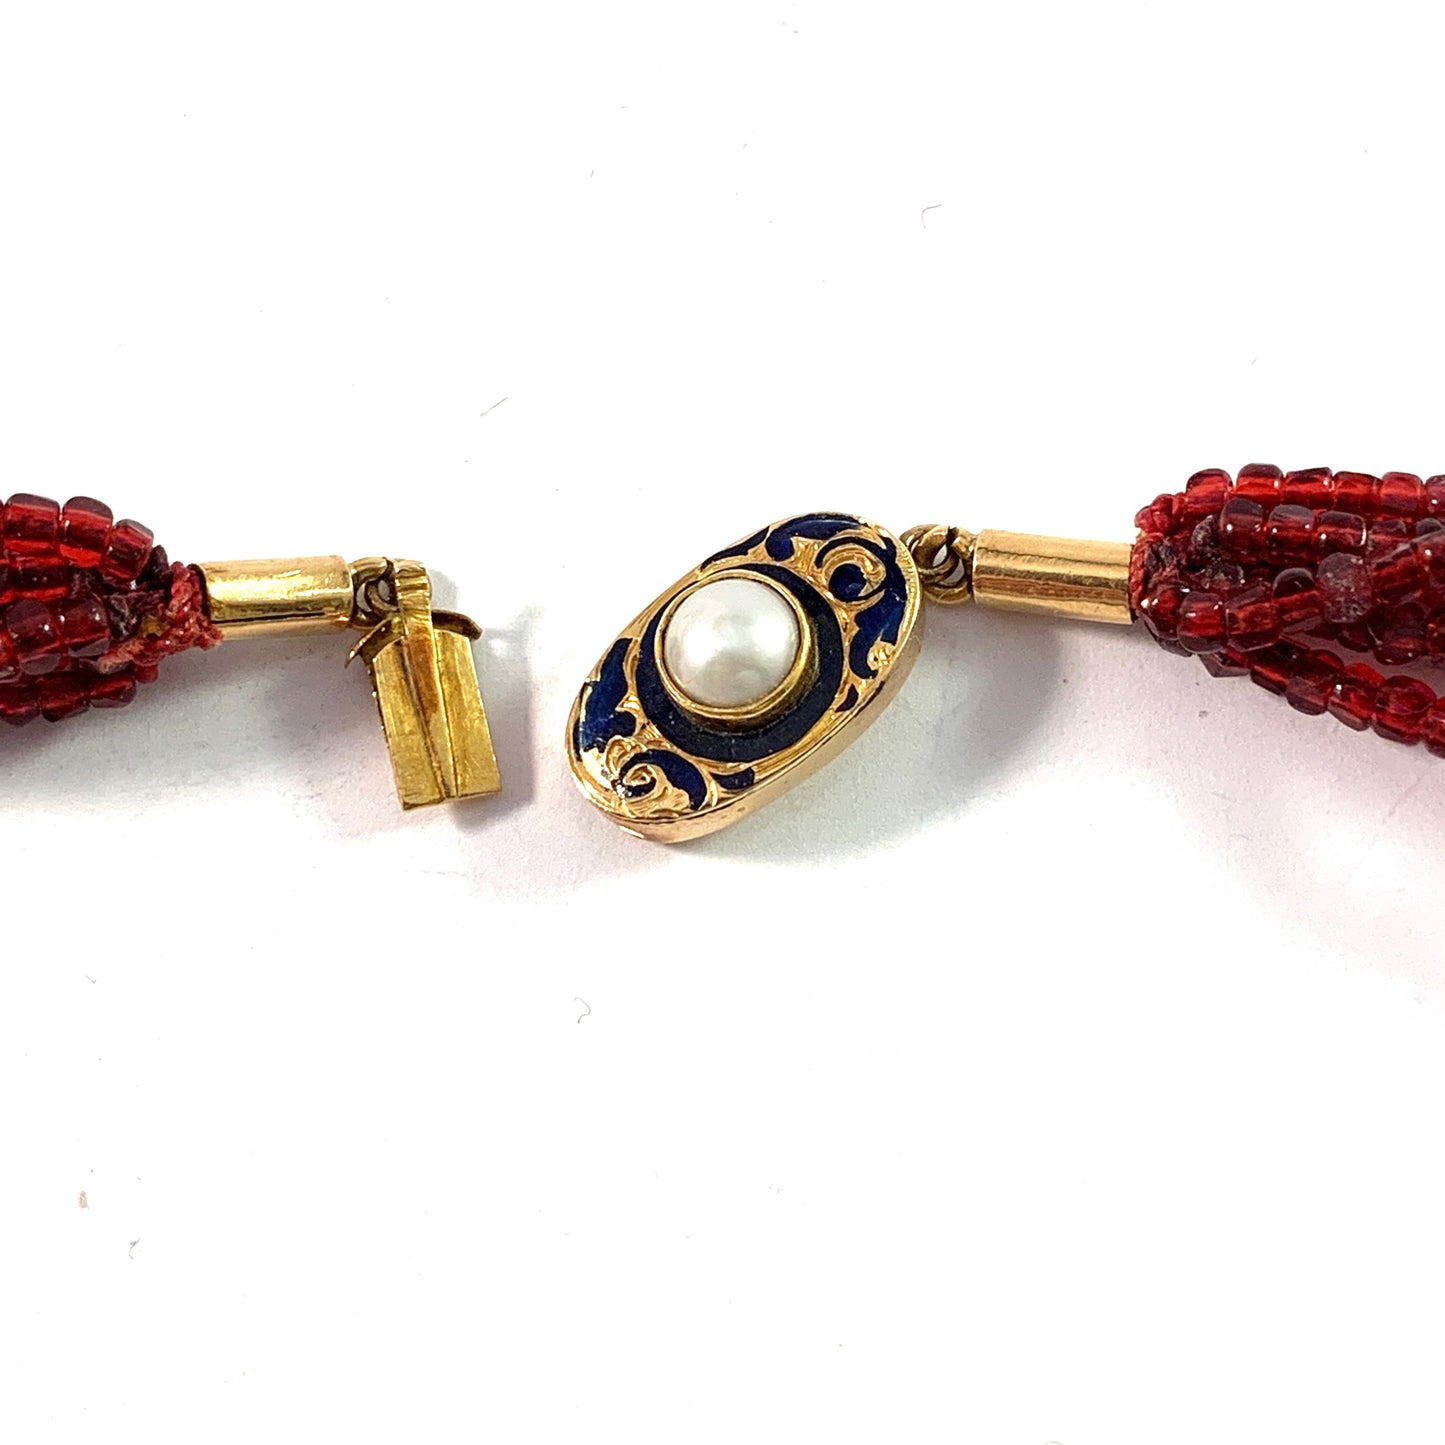 Giron & Löngren, Sweden 1844. Antique 18k Gold Paste Beads Pearl Enamel Necklace.